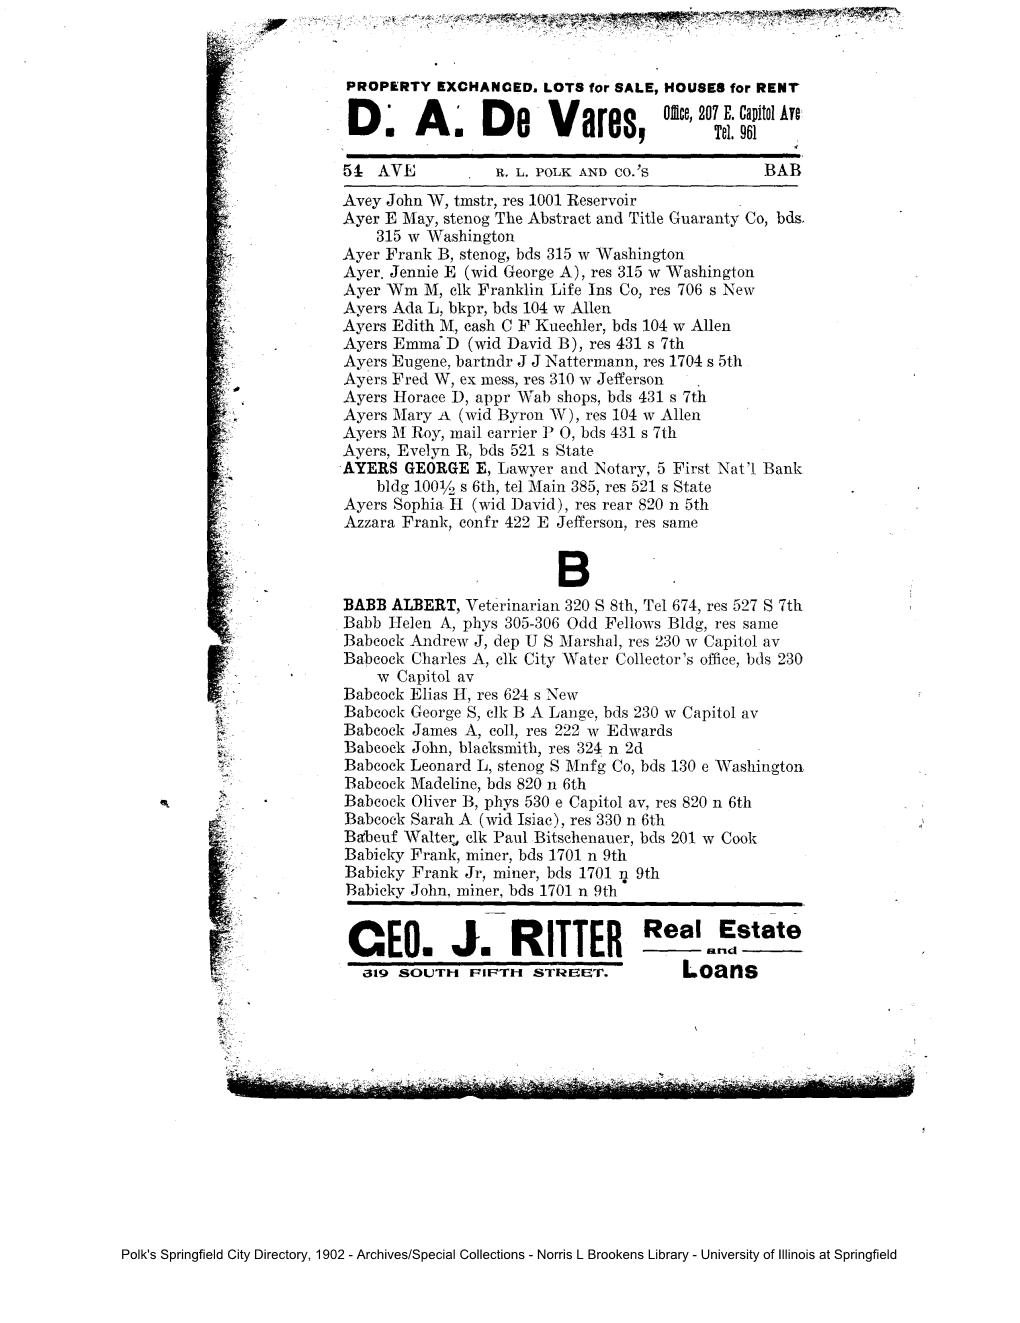 Polk's Springfield City Directory, 1902